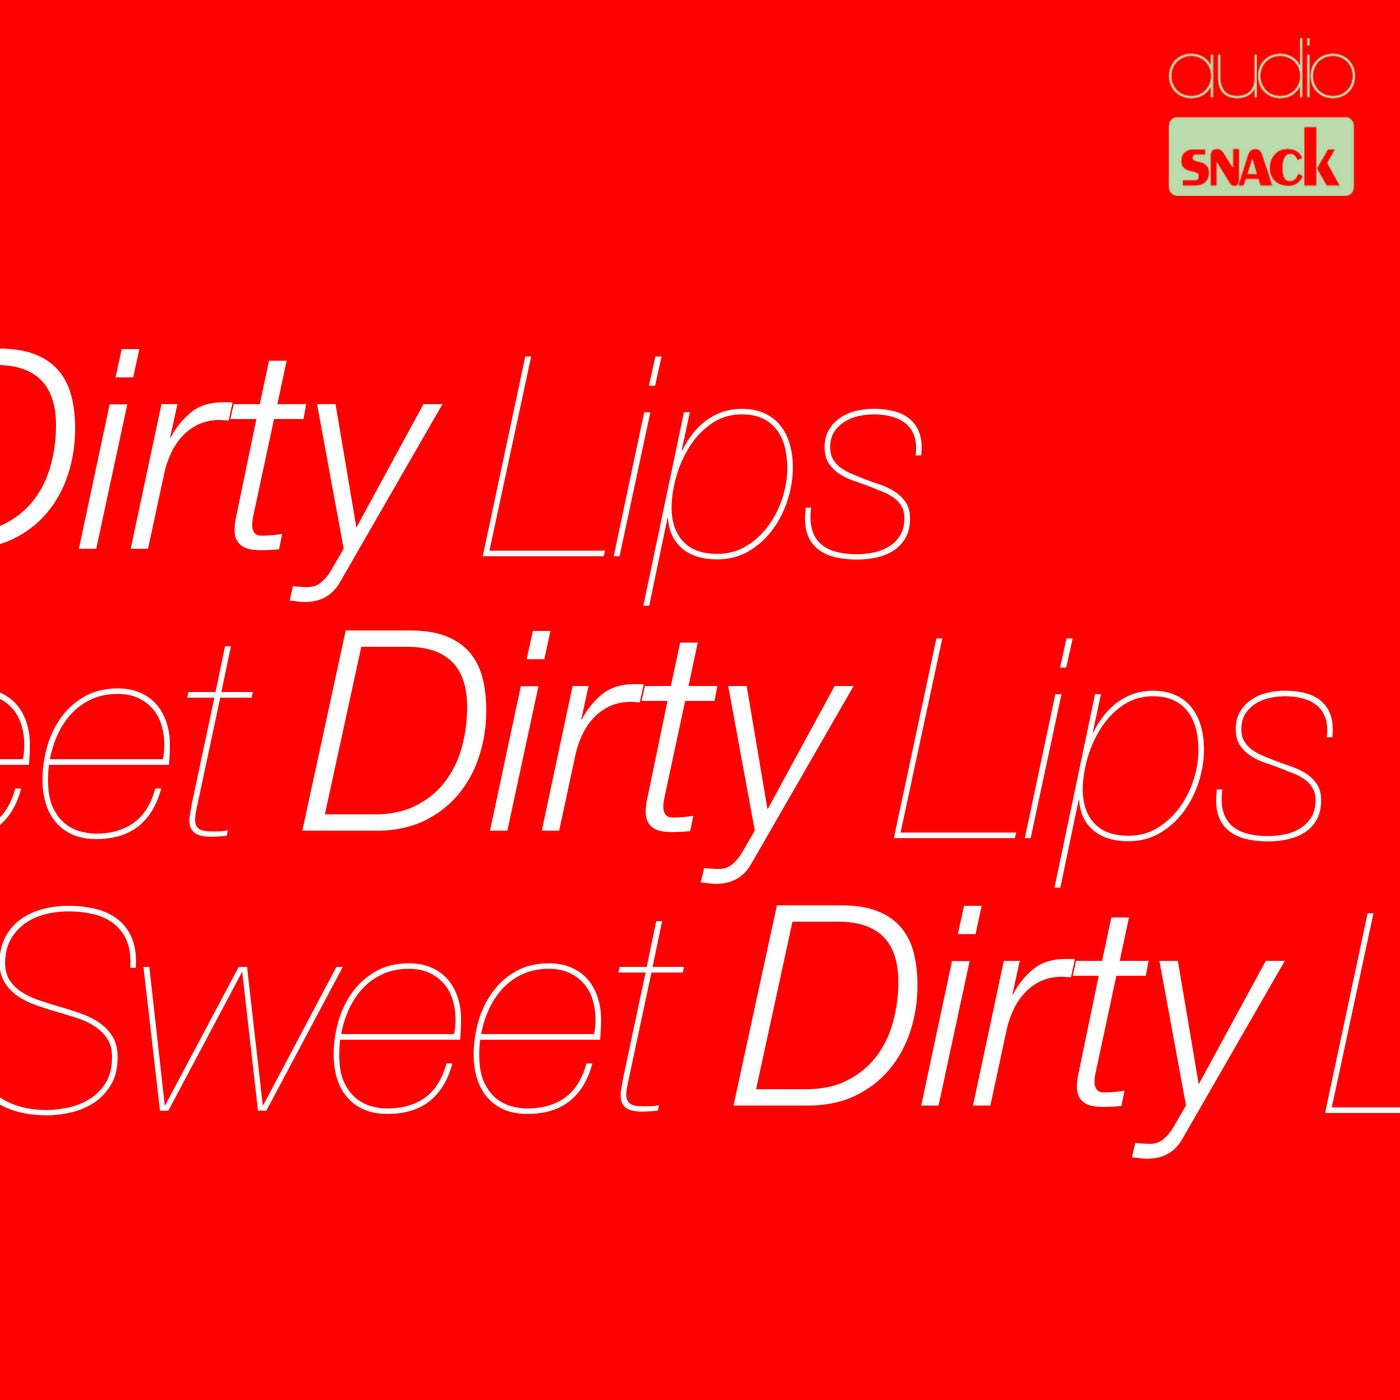 Sweet Dirty Lips